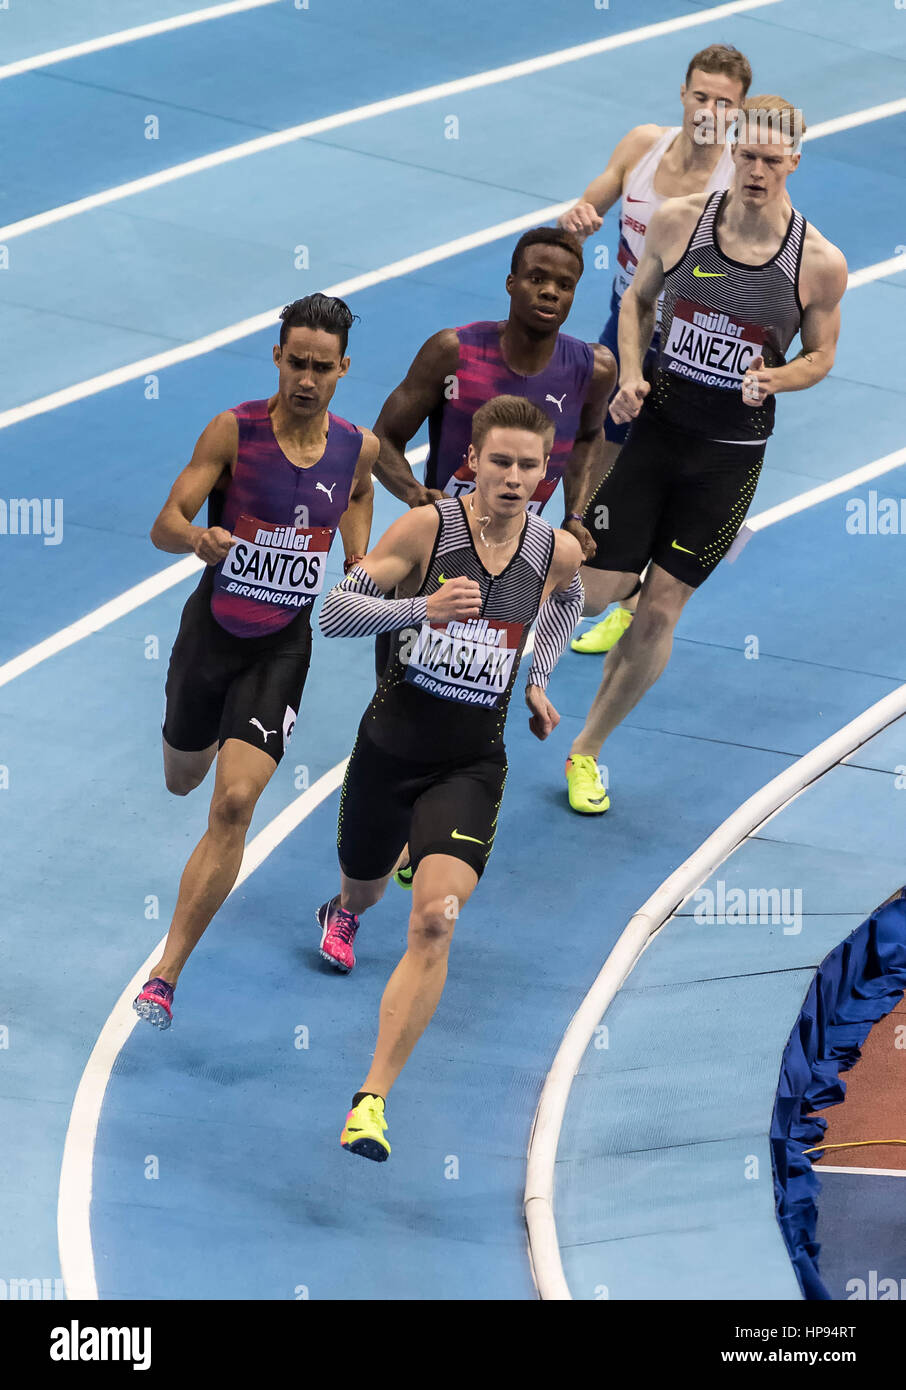 Paval Maslak (Tschechische Republik) die Mens 400 Meter Finale bei Barclaycard Arena, Birmingham, England in den Müller Indoor Grand Prix zu gewinnen. Sekunde Stockfoto